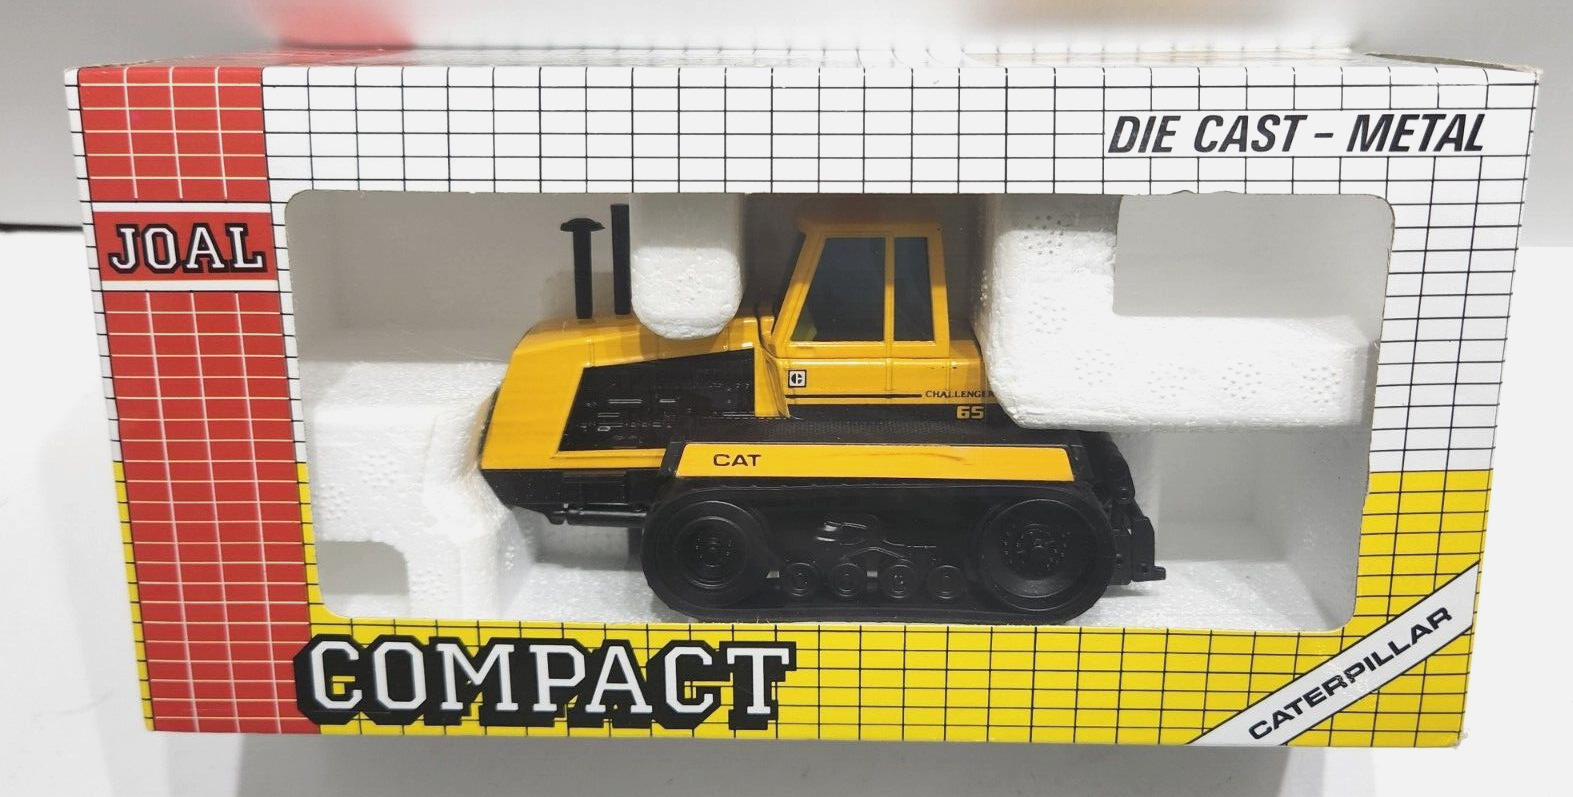 JOAL Caterpillar Cat Challenger 65 Tractor 1/50 Scale Toy Die-Cast Metal Spain